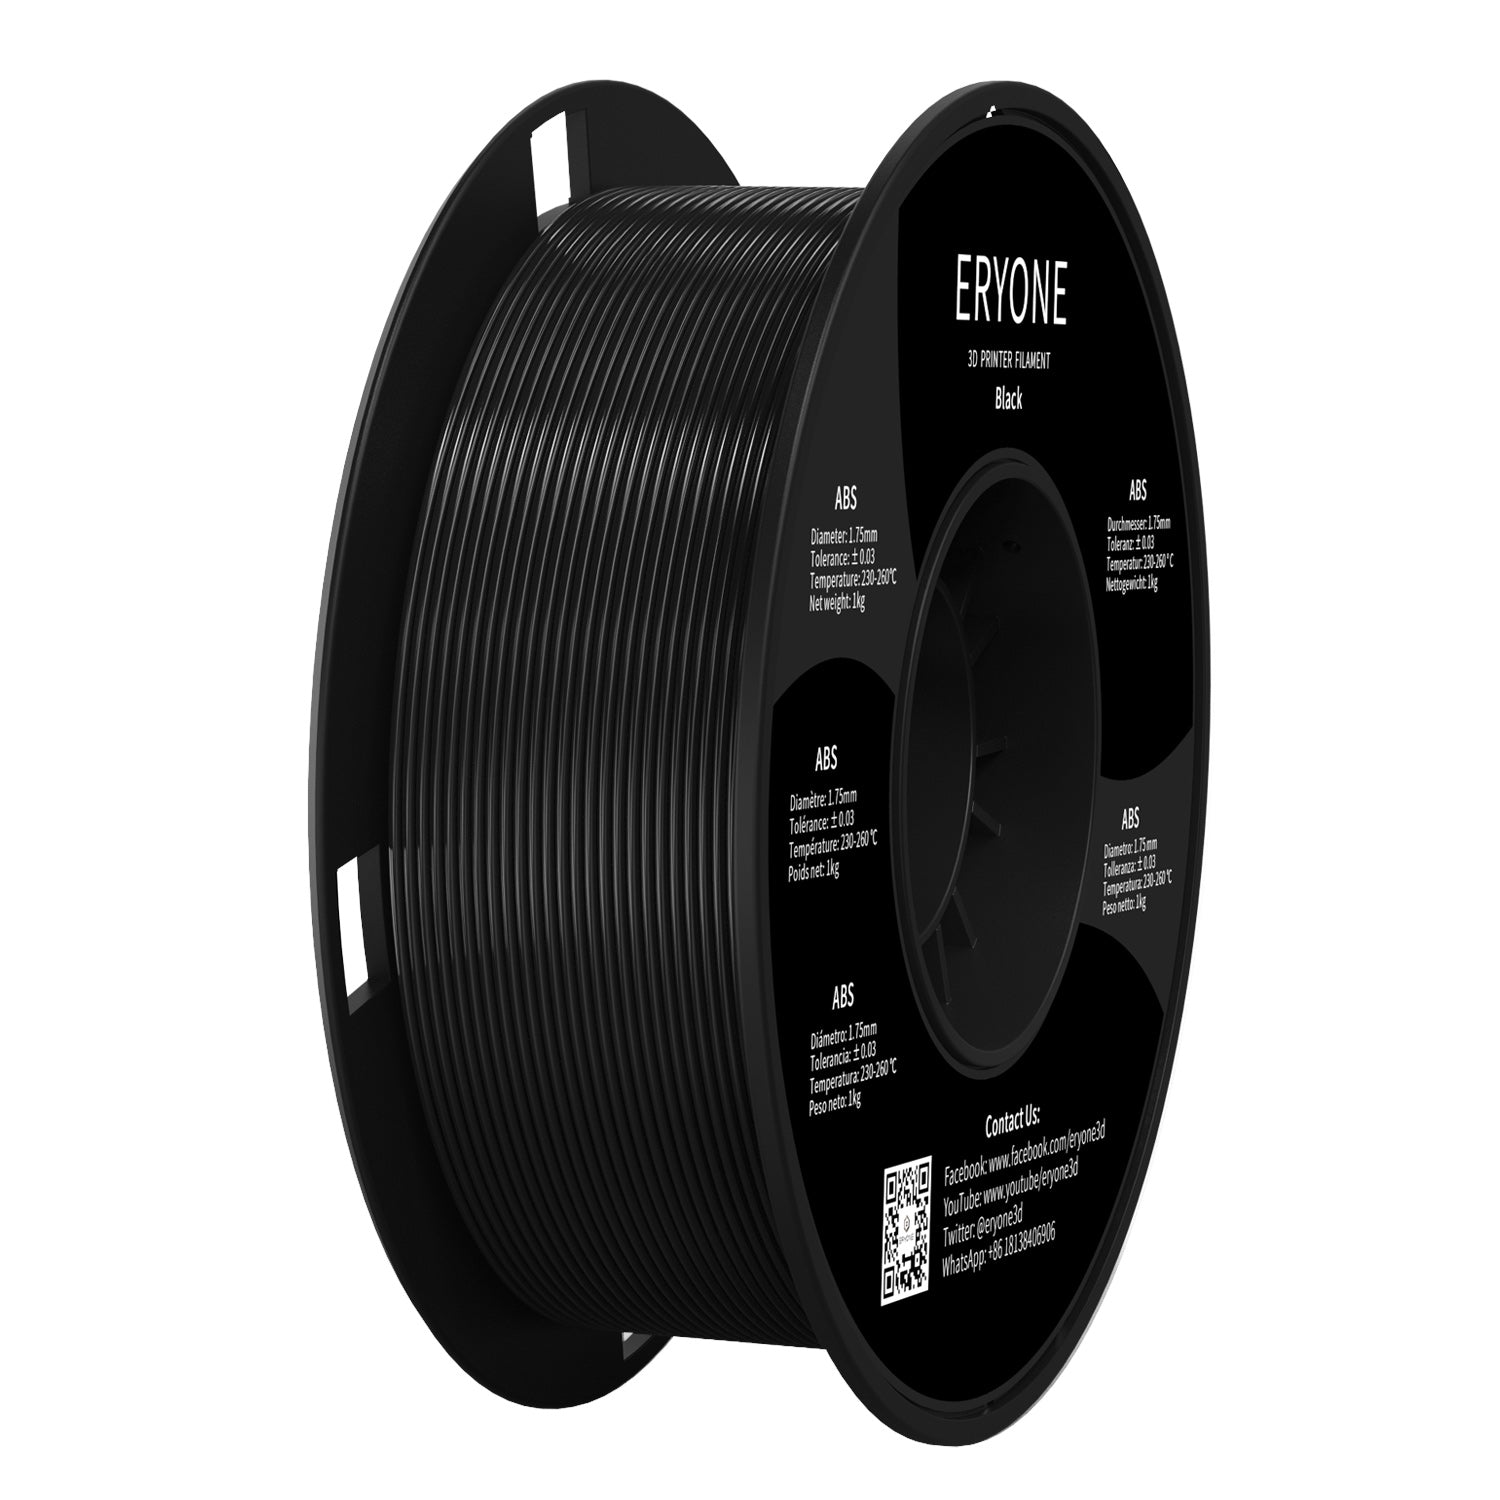 Pre-sale ERYONE ABS 3D Printer Filament 1.75mm, Dimensional Accuracy +/- 0.05 Mm 1kg (2.2LBS)/Spool